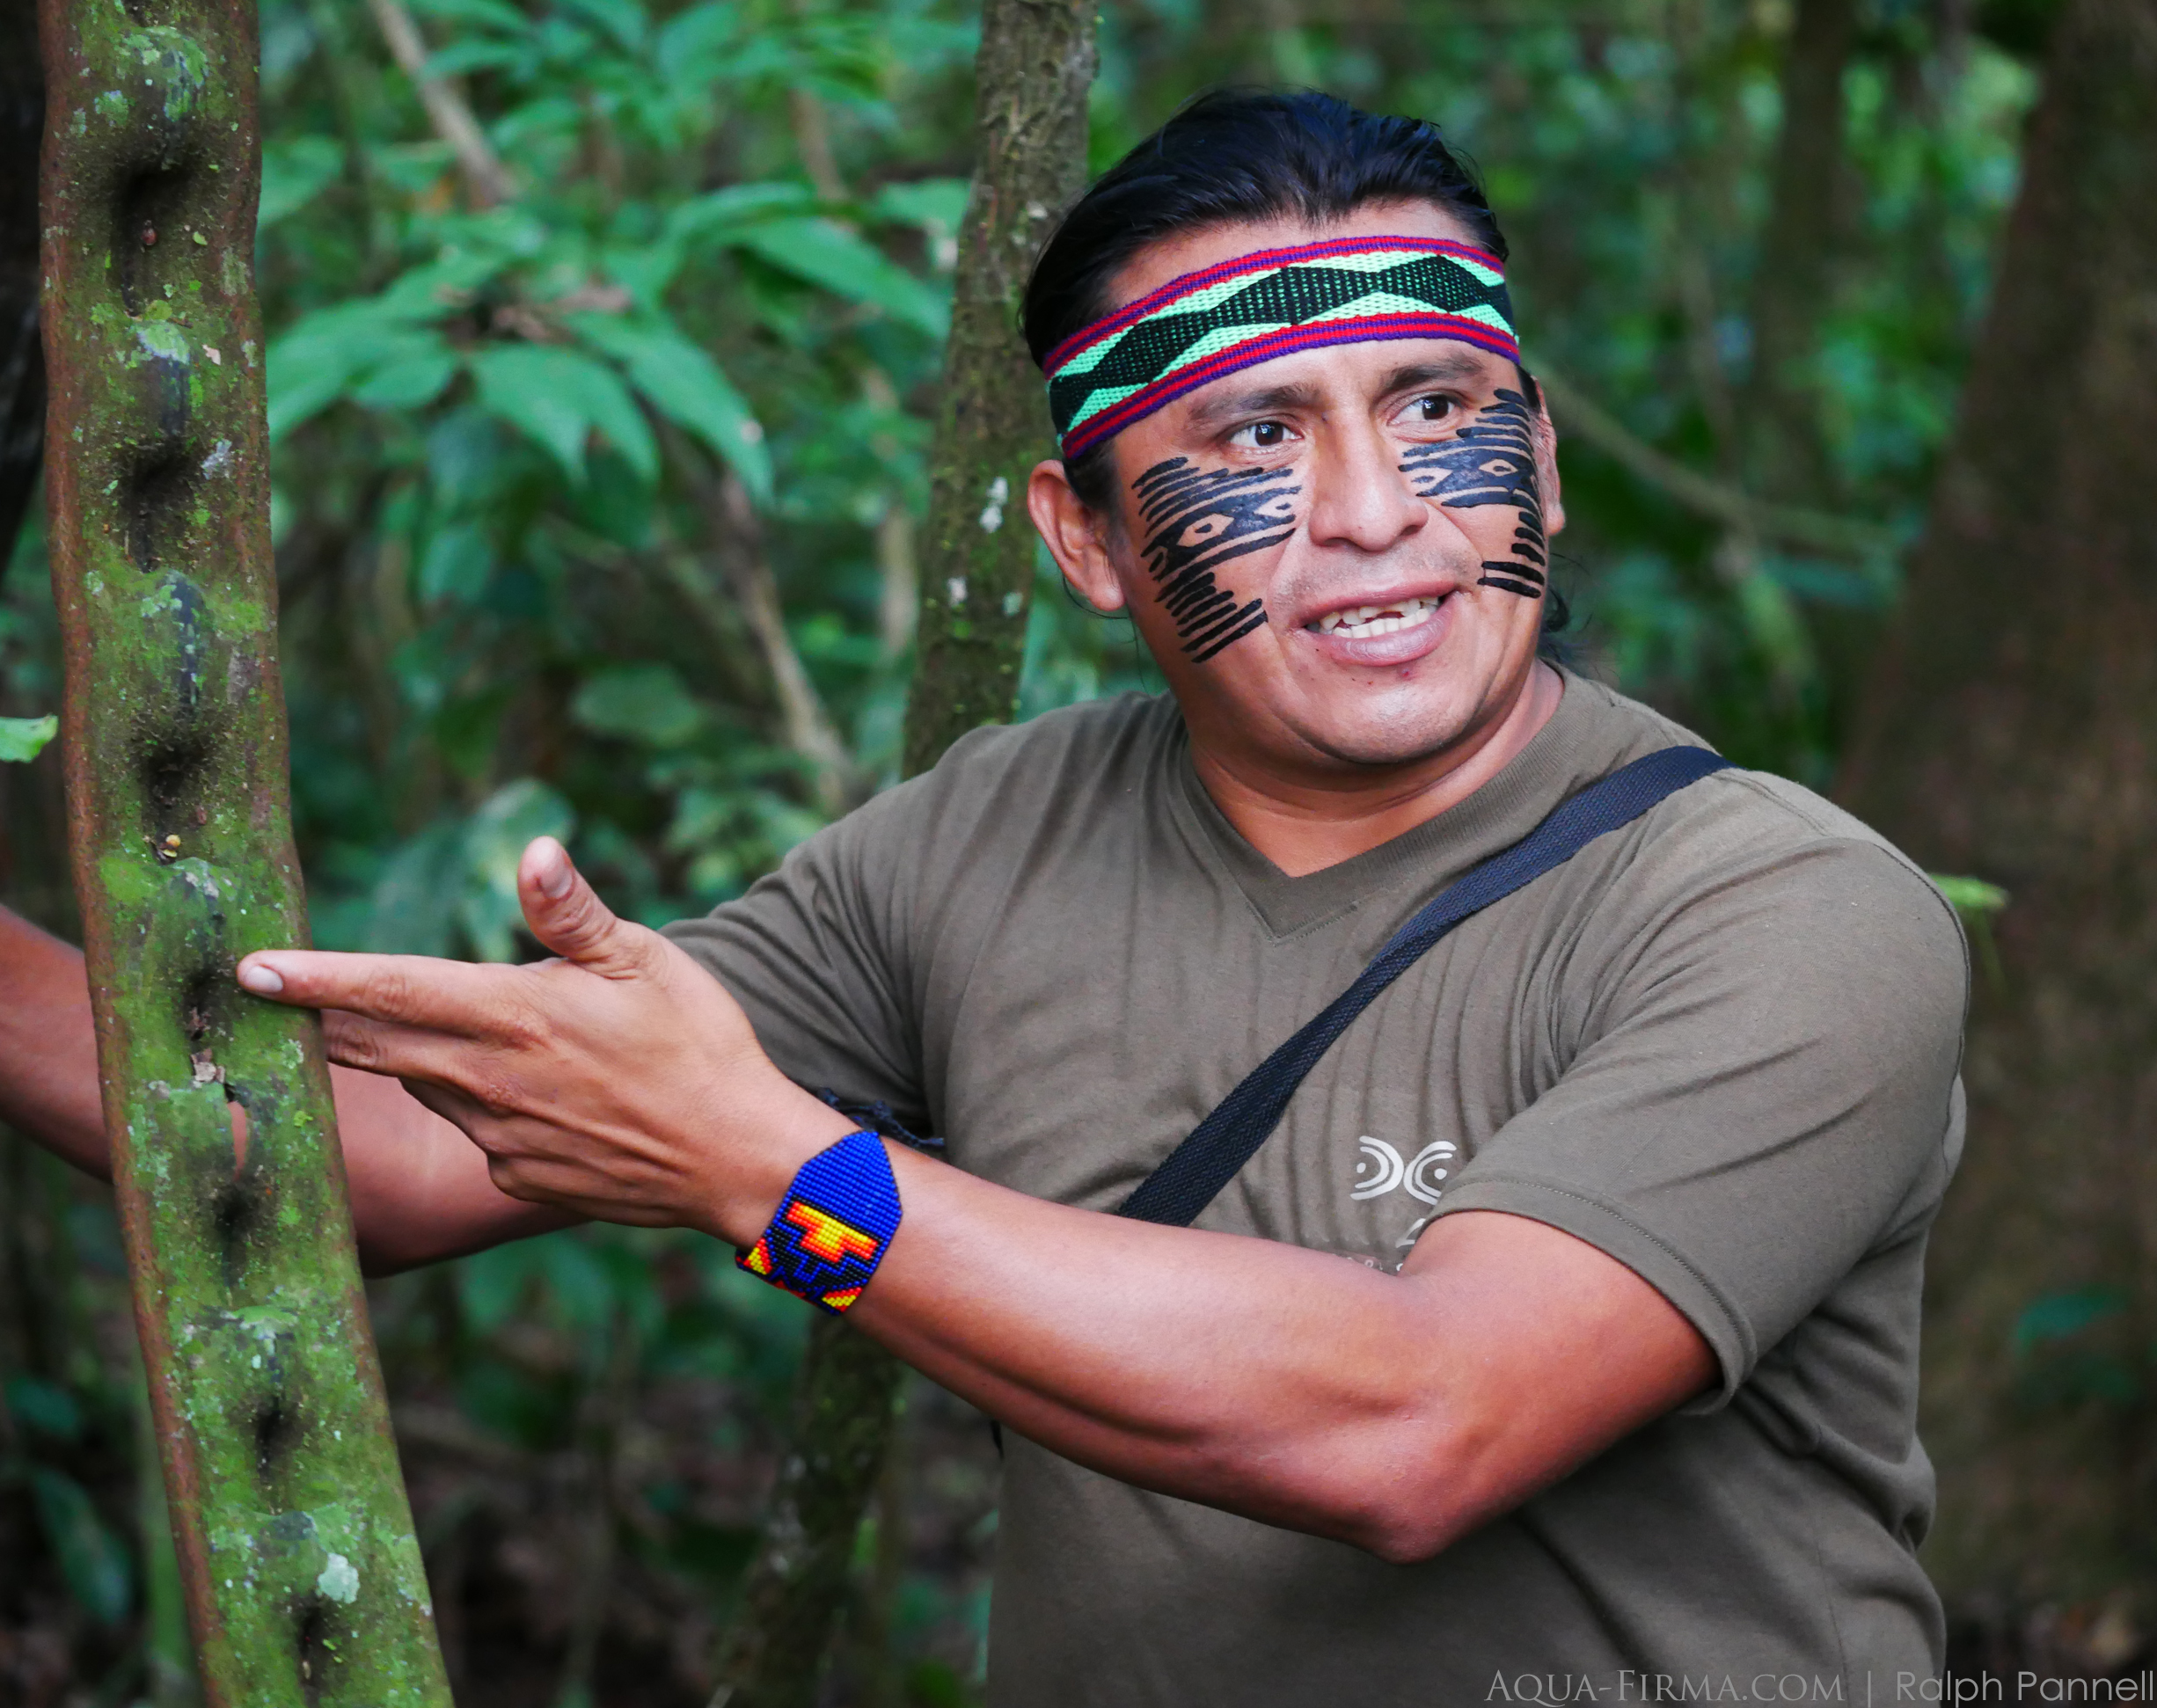 Achuar Amazon rainforest guide kapawi